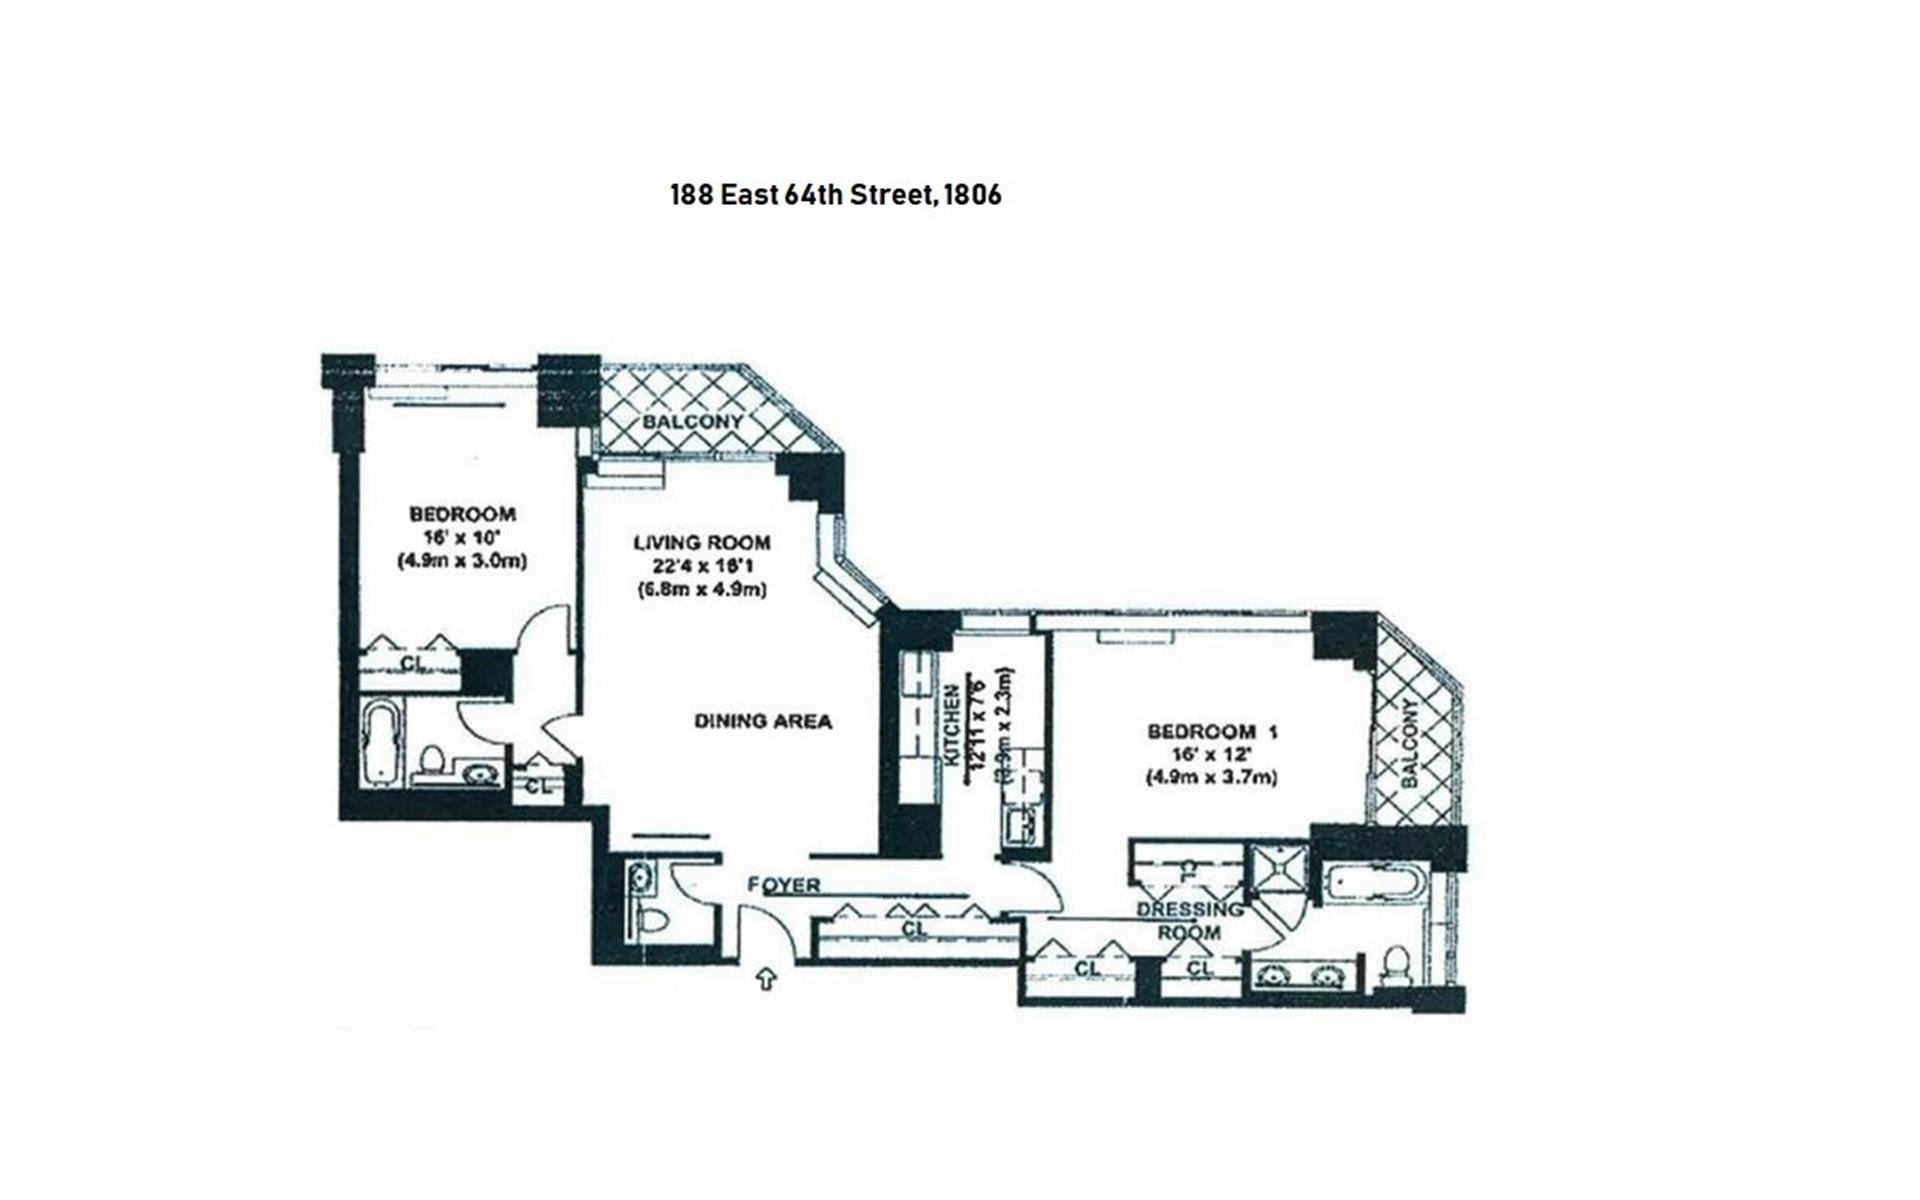 Floorplan for 188 East 64th Street, 1806